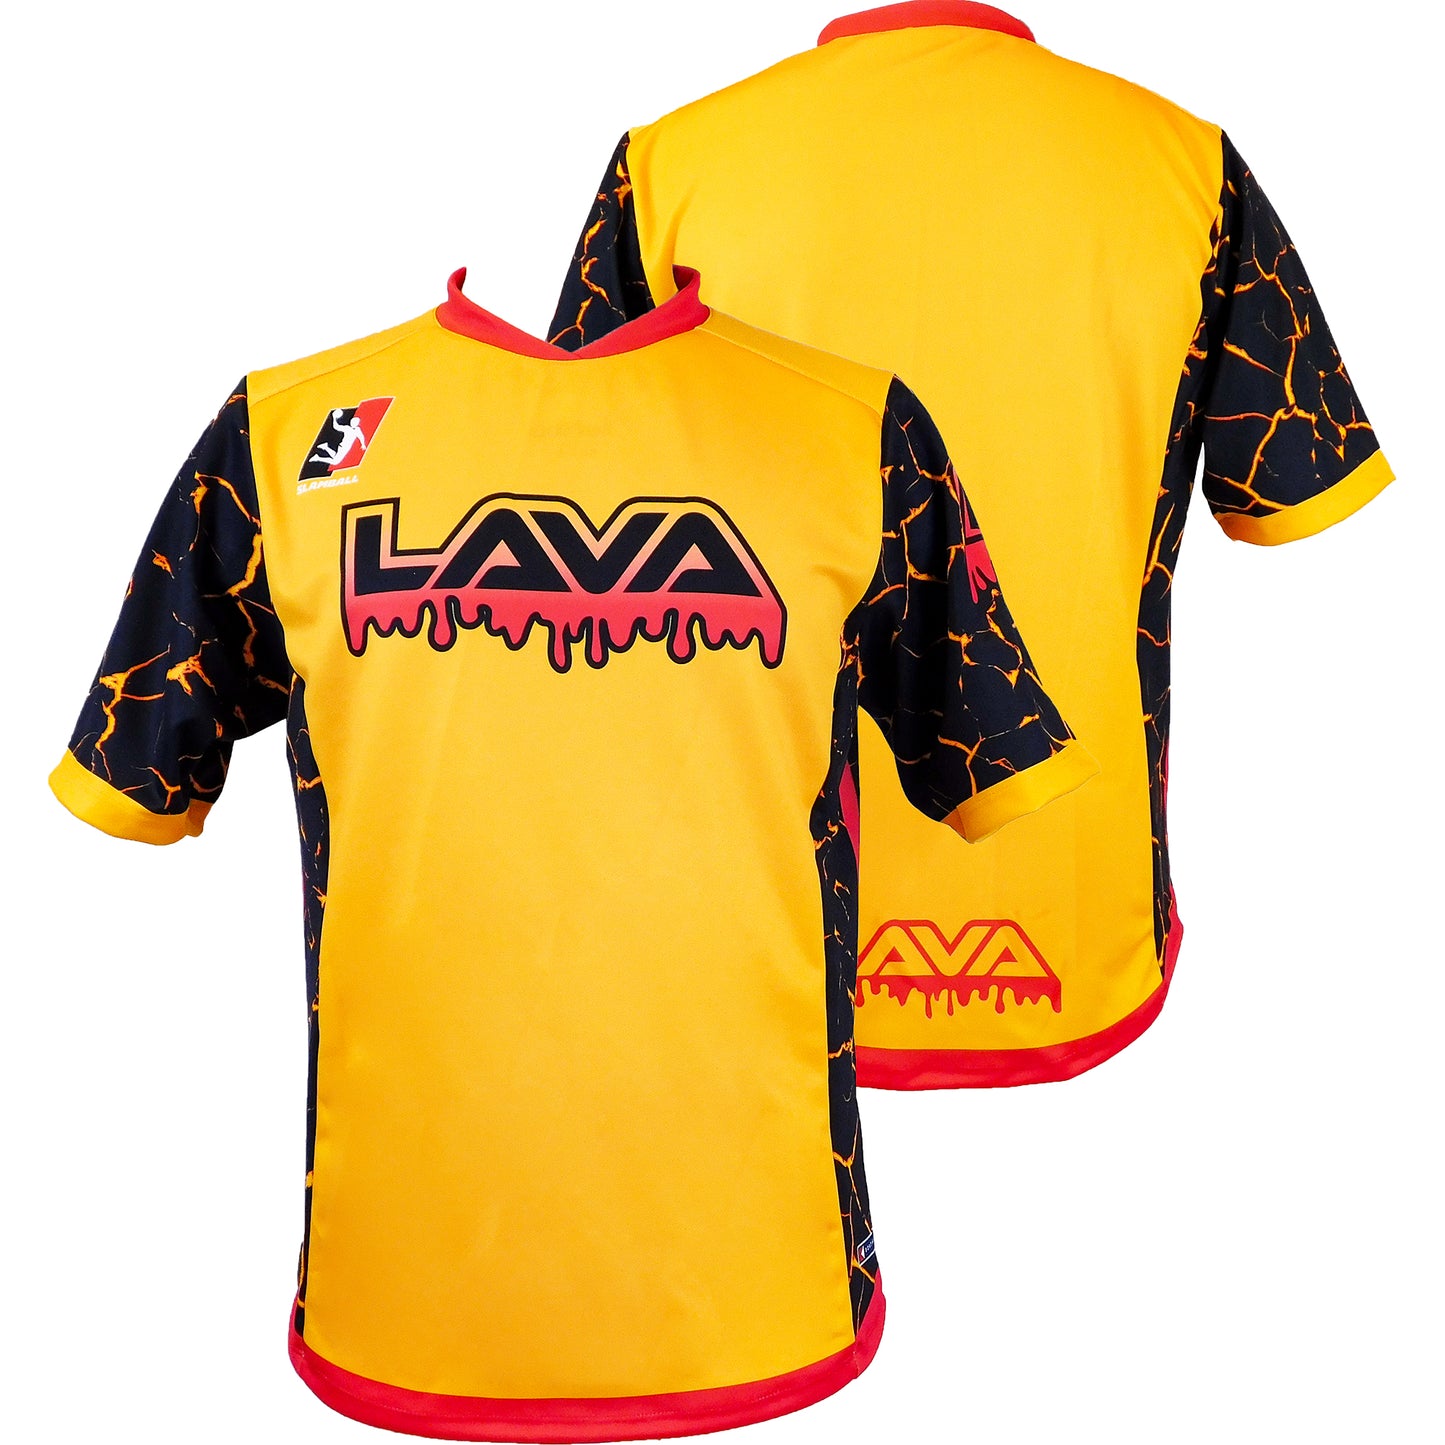 LAVA - Team Jersey - Athletic Gold / Black